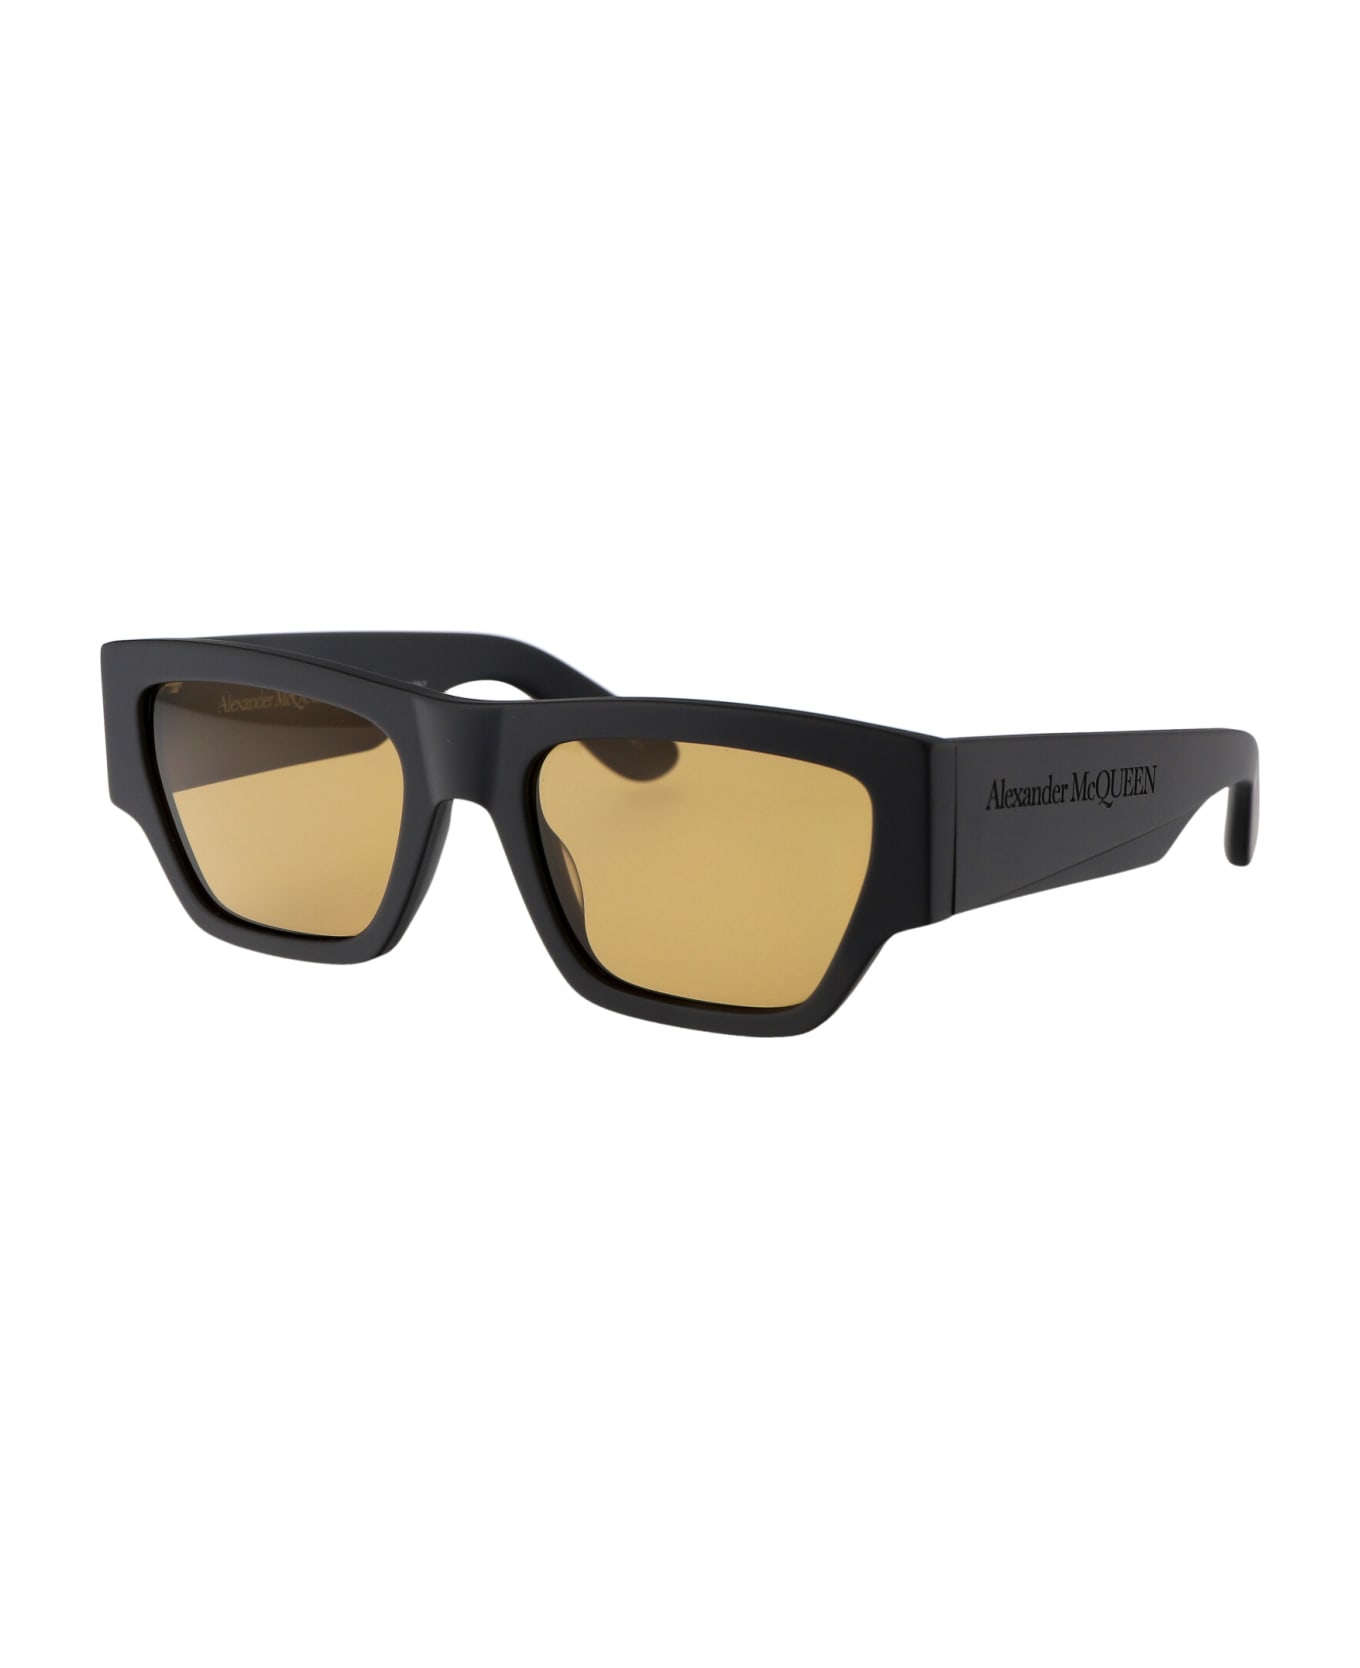 Alexander McQueen Eyewear Am0393s Sunglasses - 003 GREY GREY YELLOW